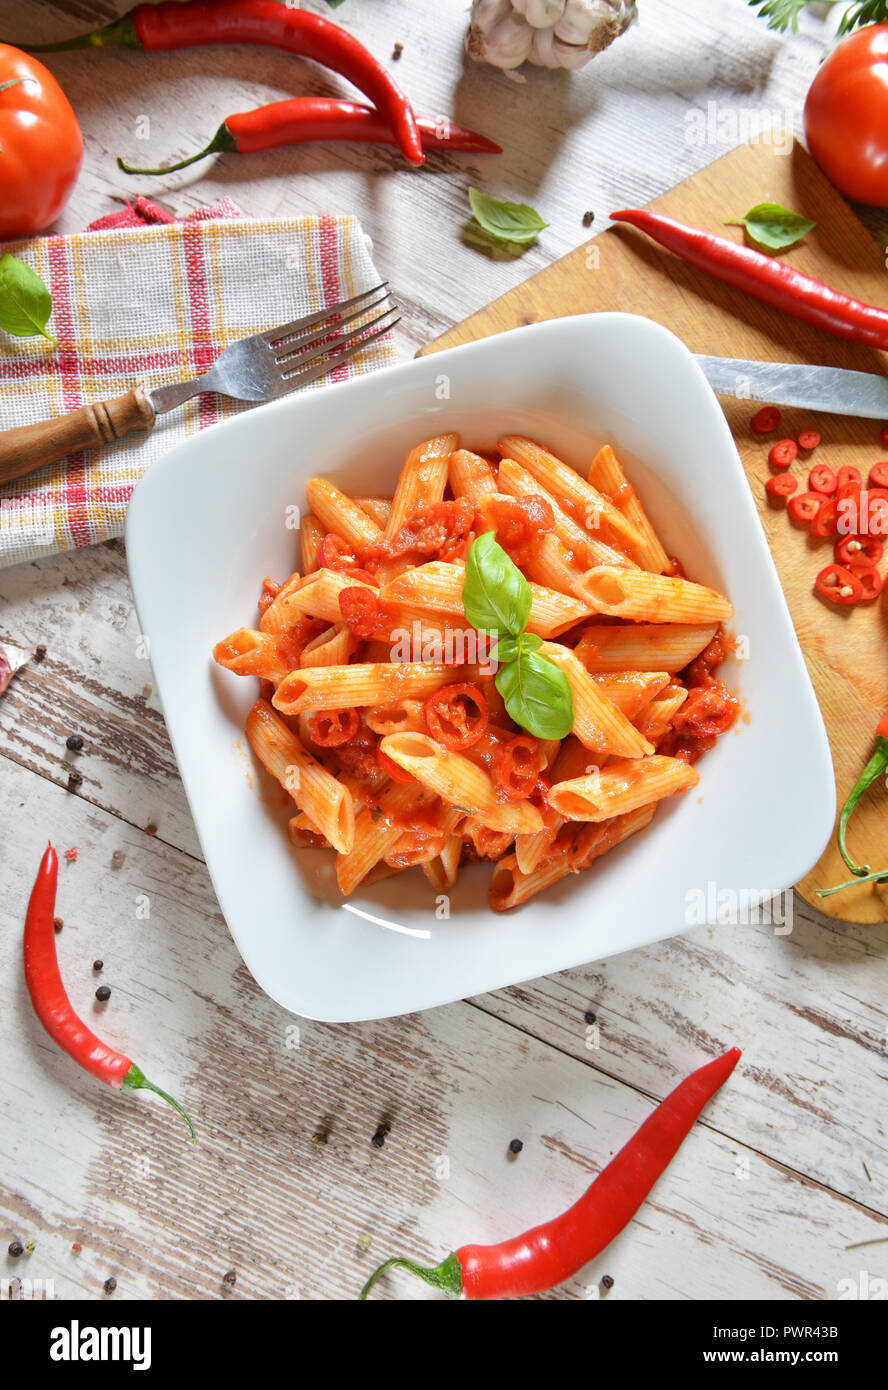 Penne pasta with chili sauce arrabiata Stock Photo - Alamy